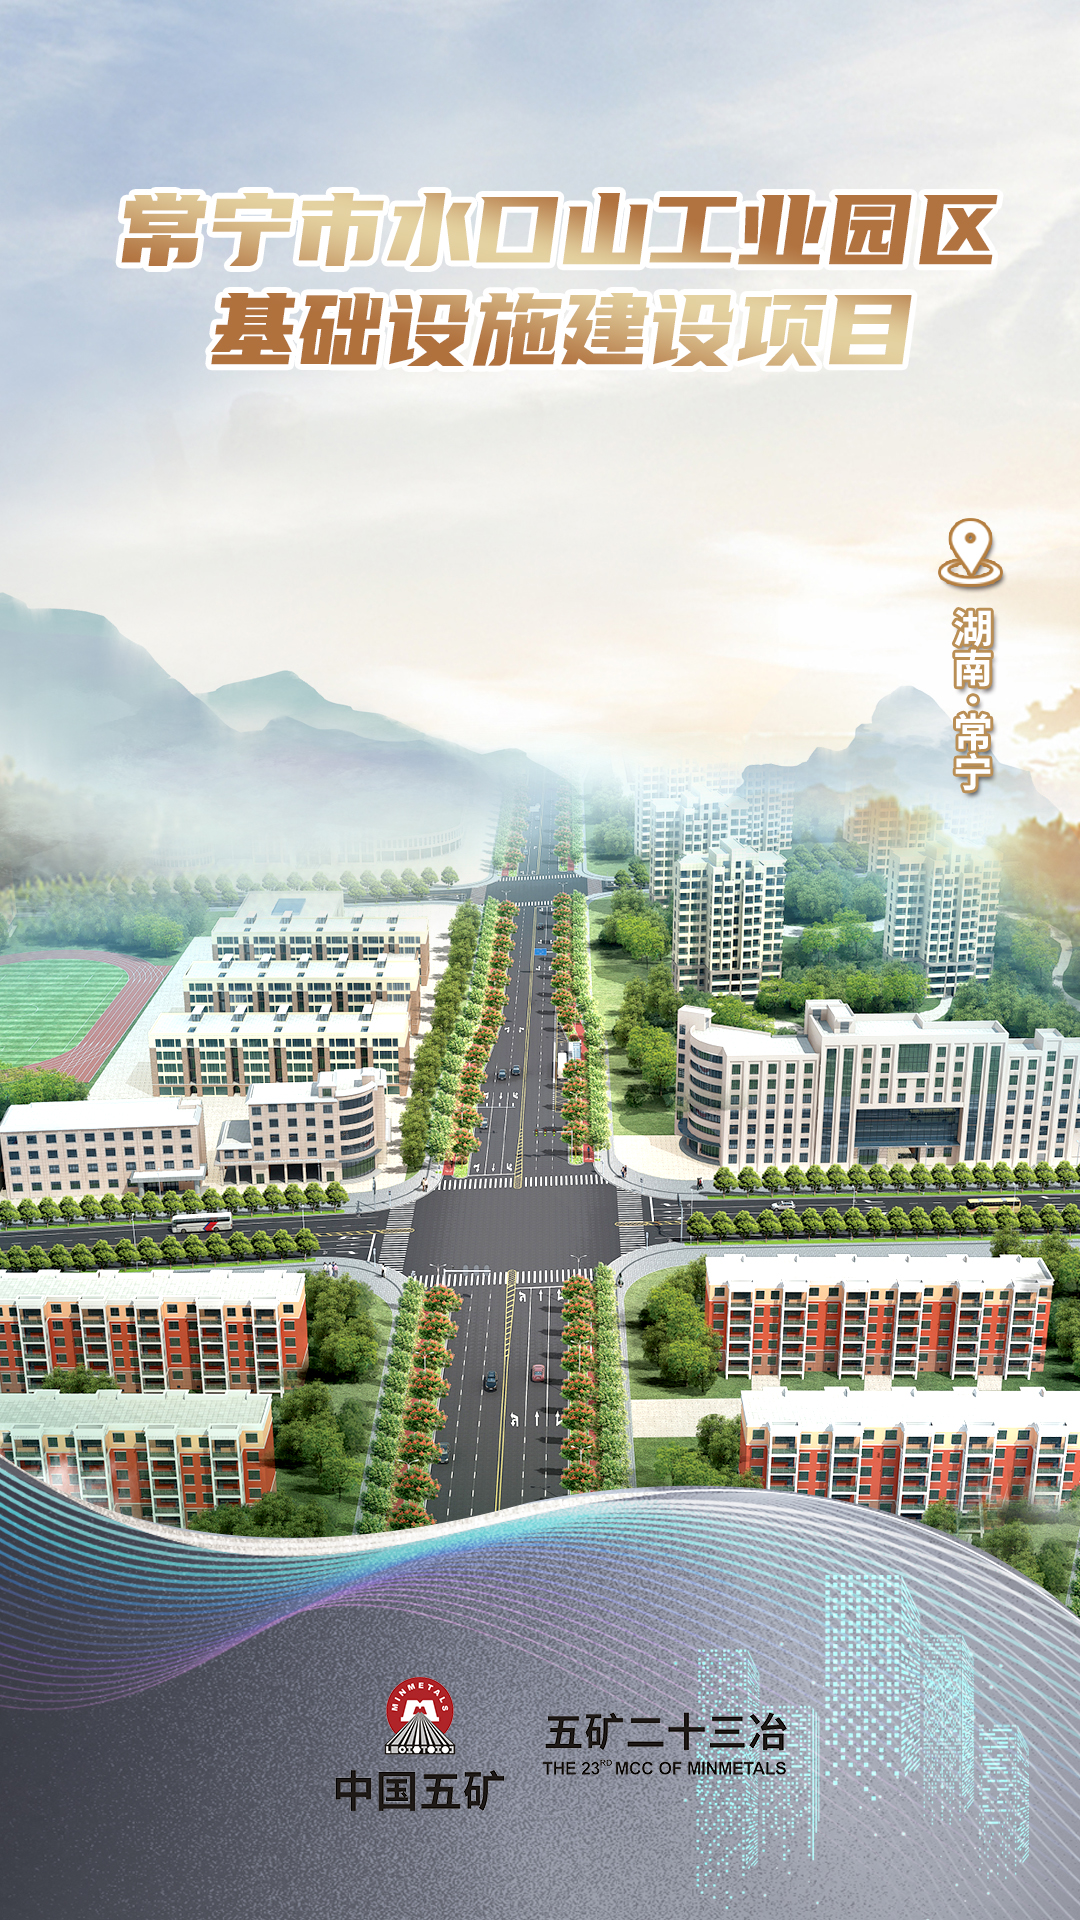 PPP常宁市水口山工业园区基础设施建设项目.jpg